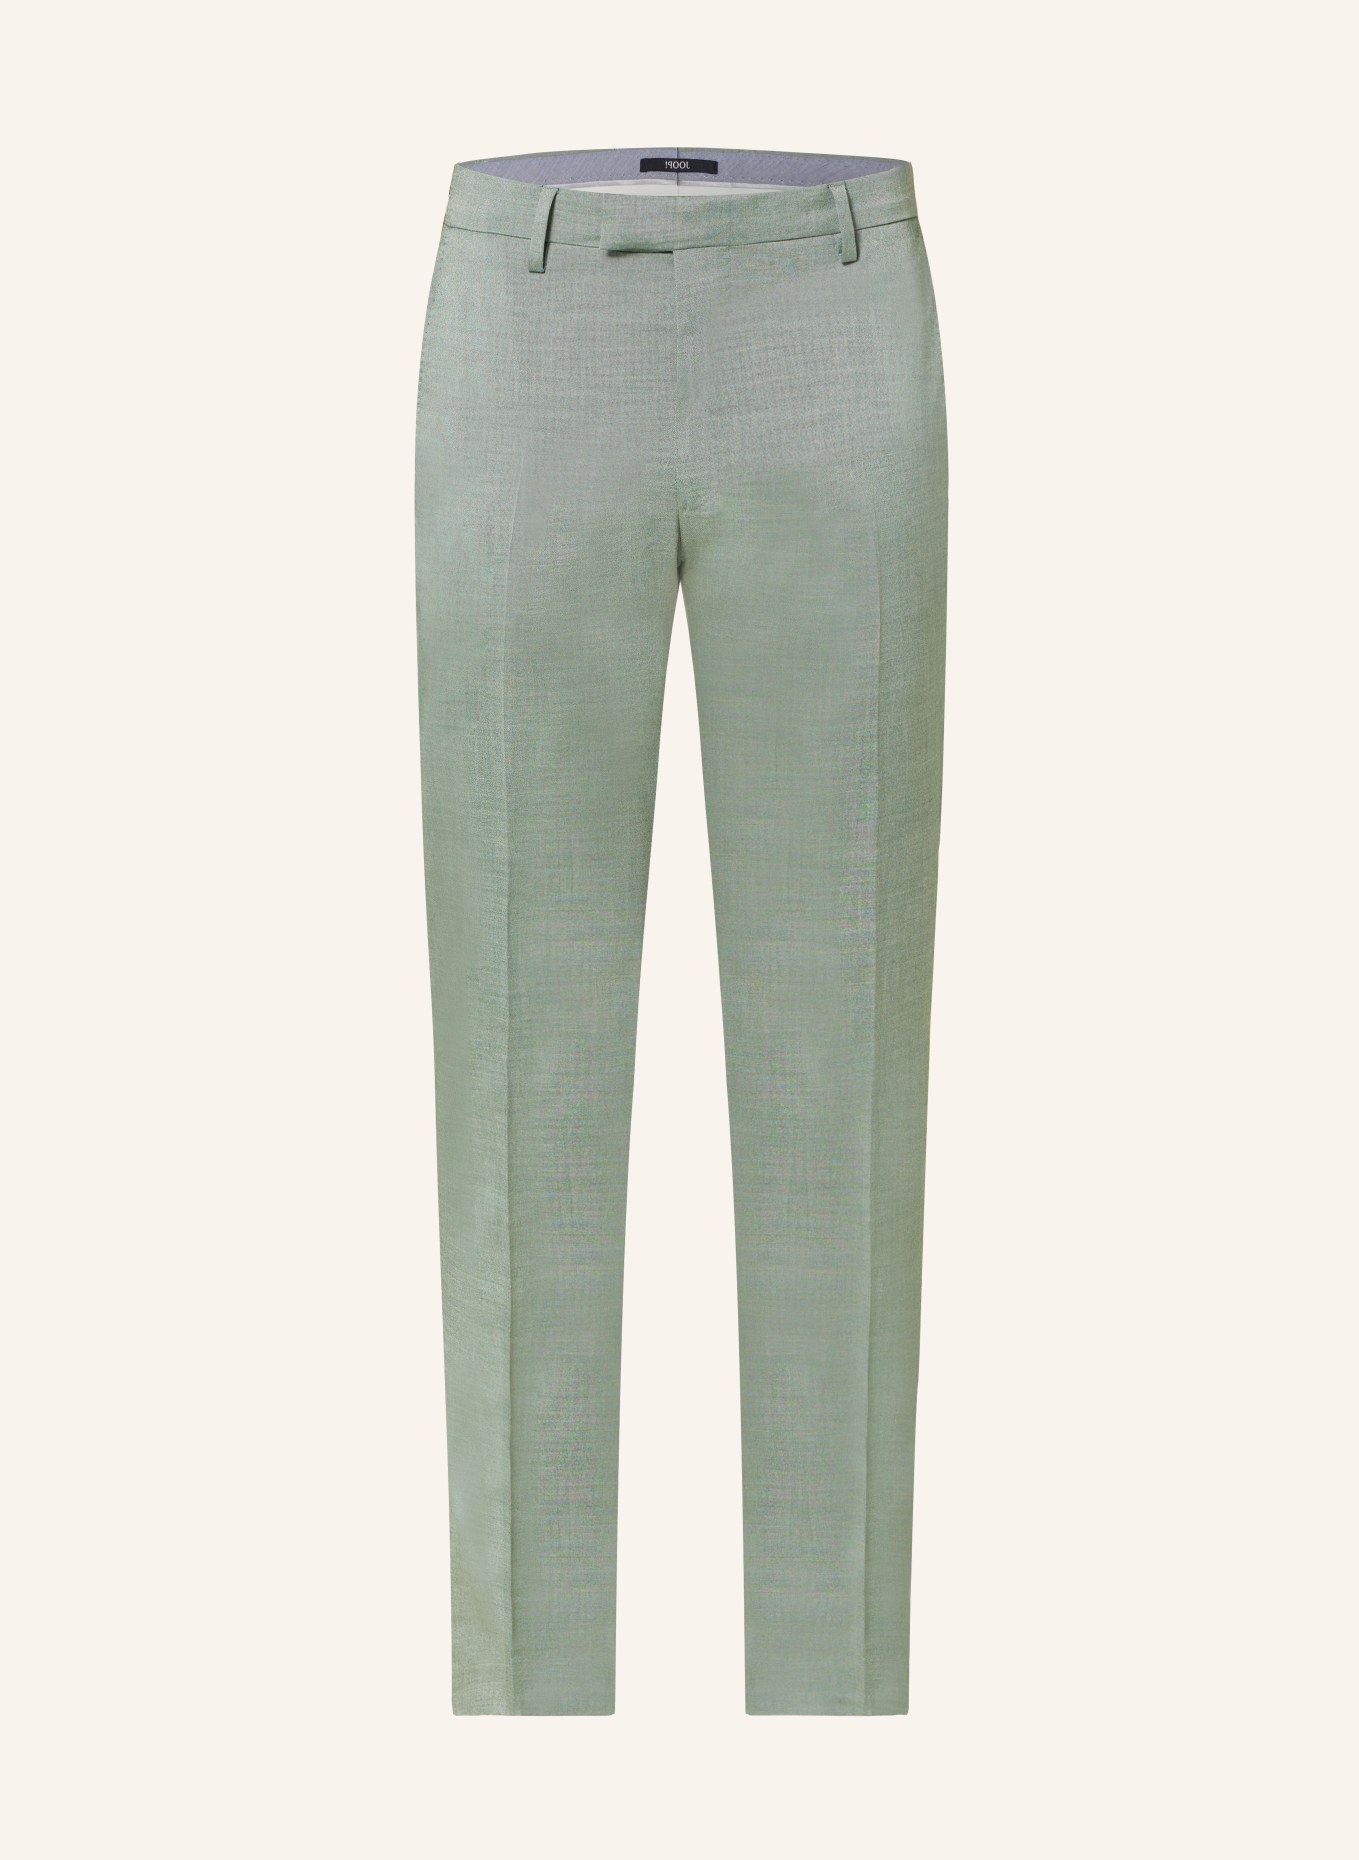 JOOP! Anzughose BLAYR Slim Fit, Farbe: 325 Bright Green               325 (Bild 1)